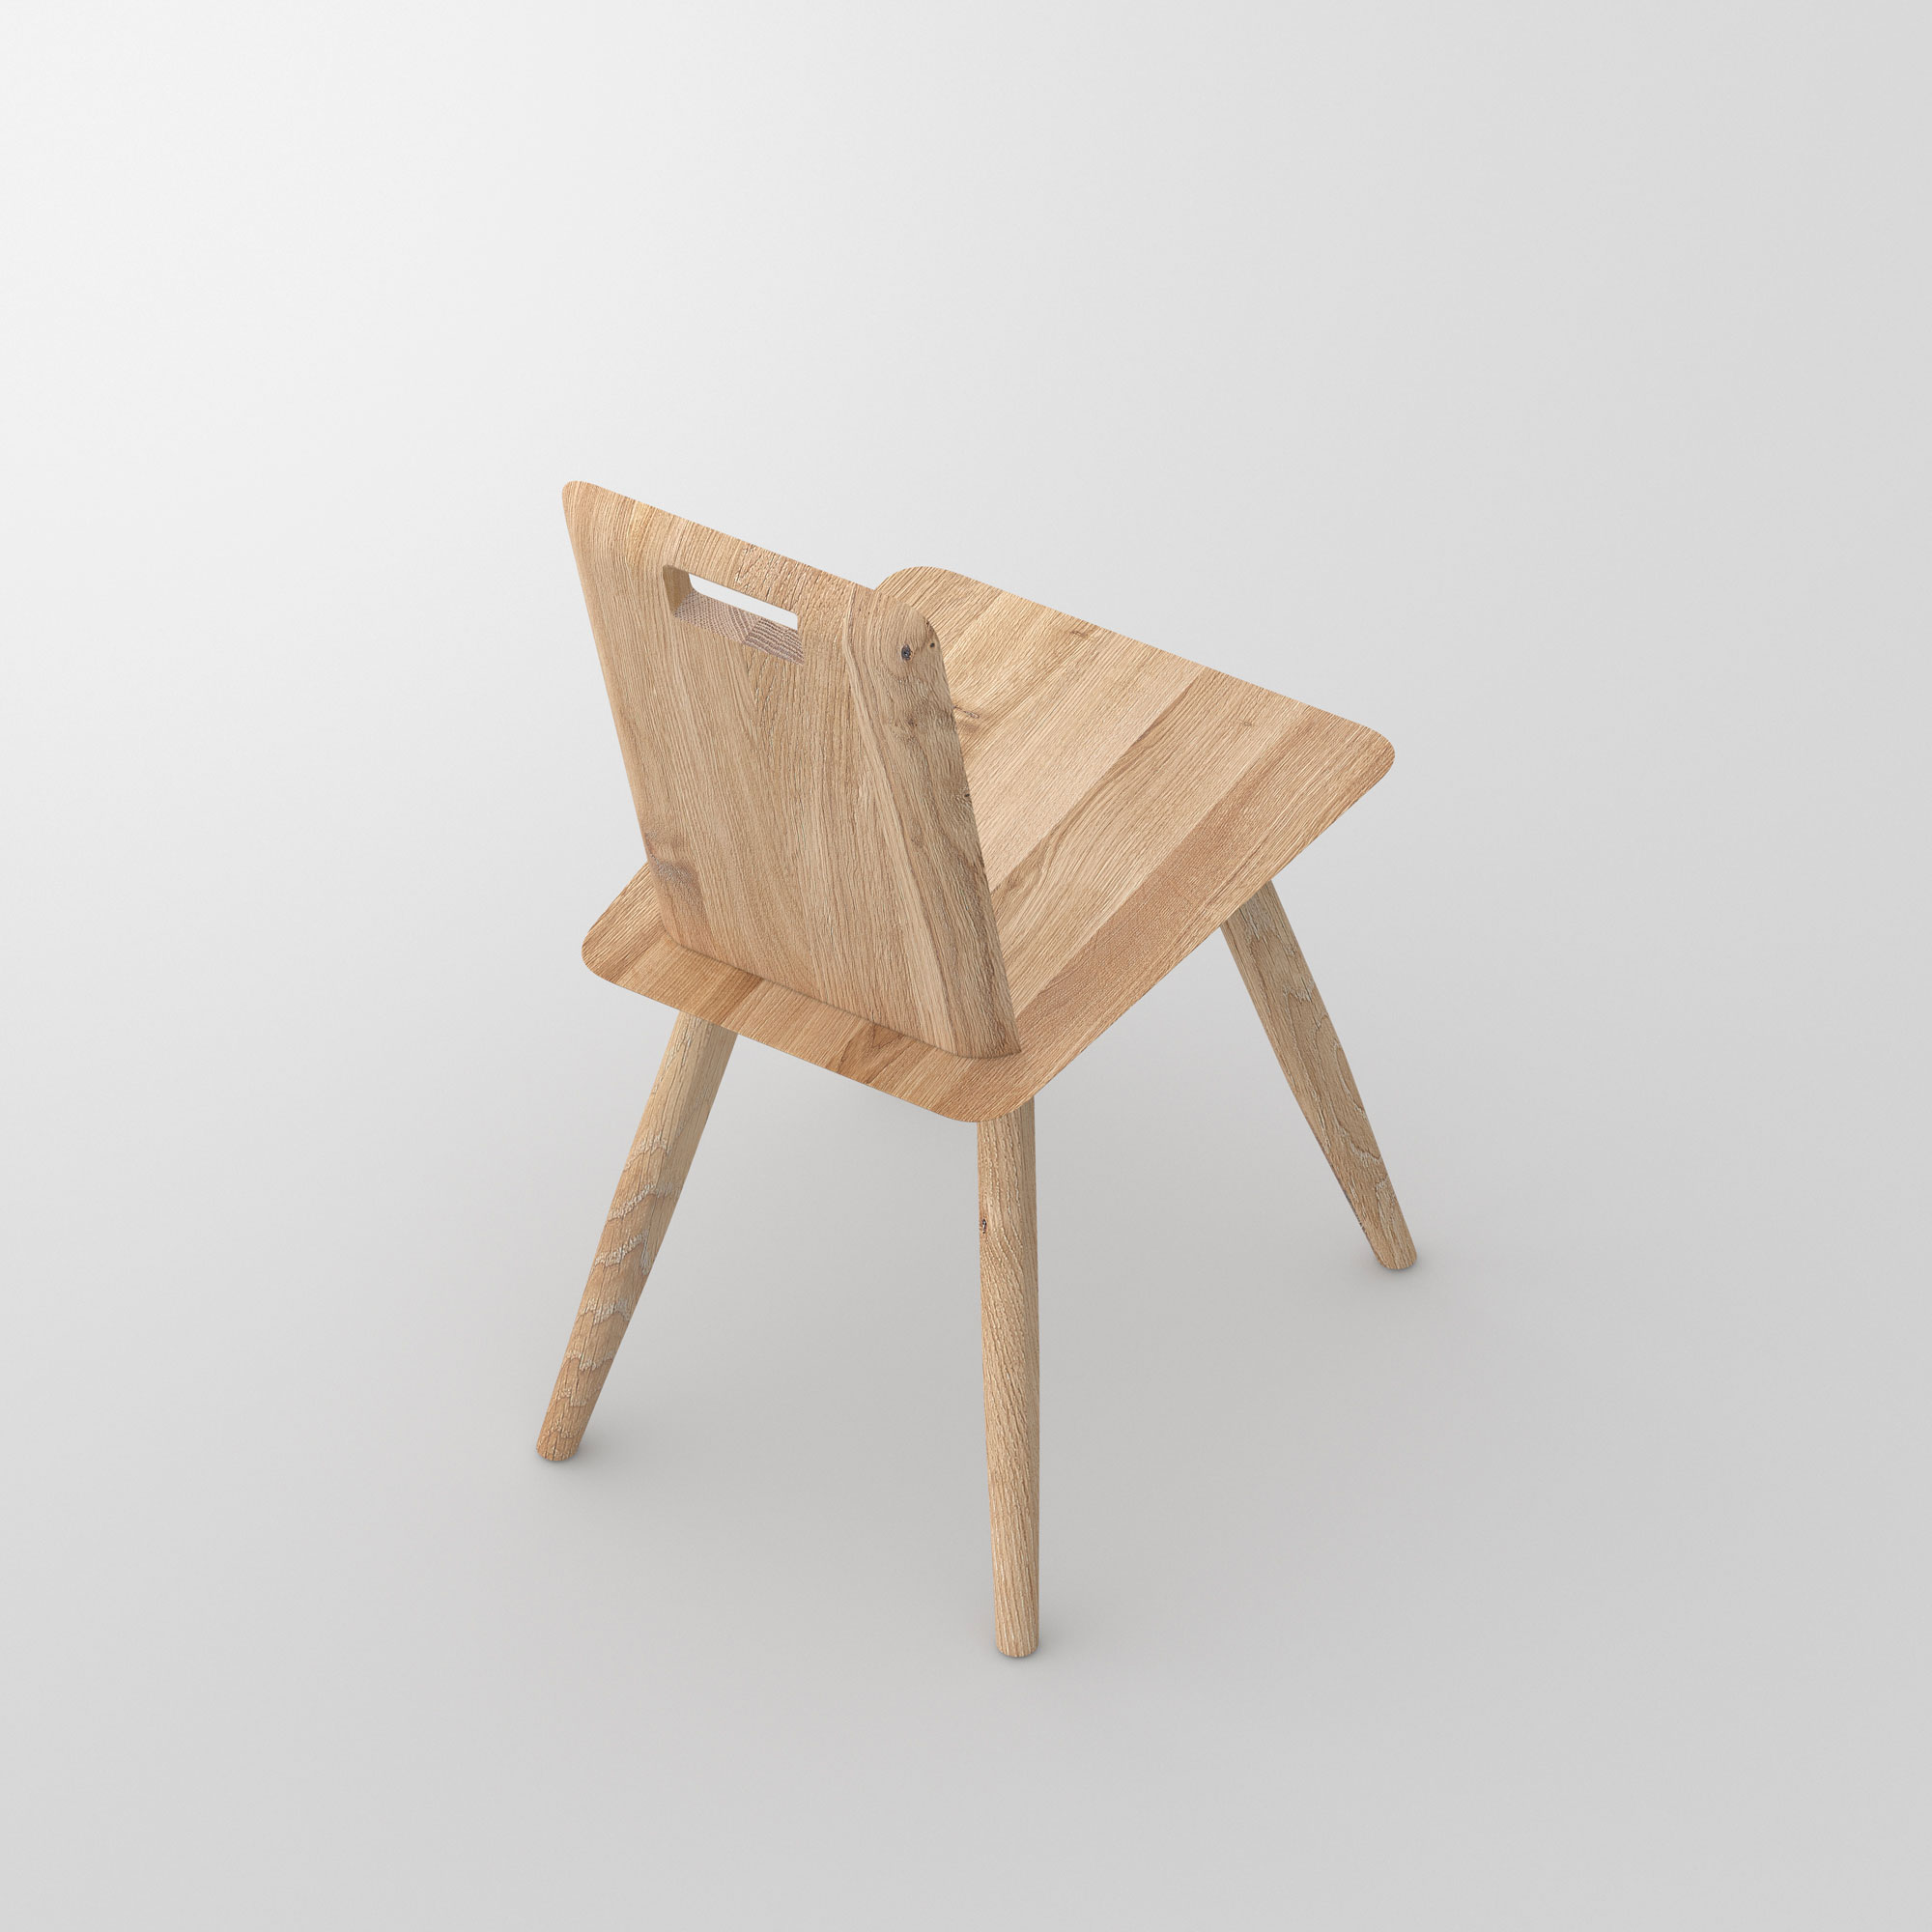 Designer Chair AETAS vitamin-design custom made in solid wood by vitamin design